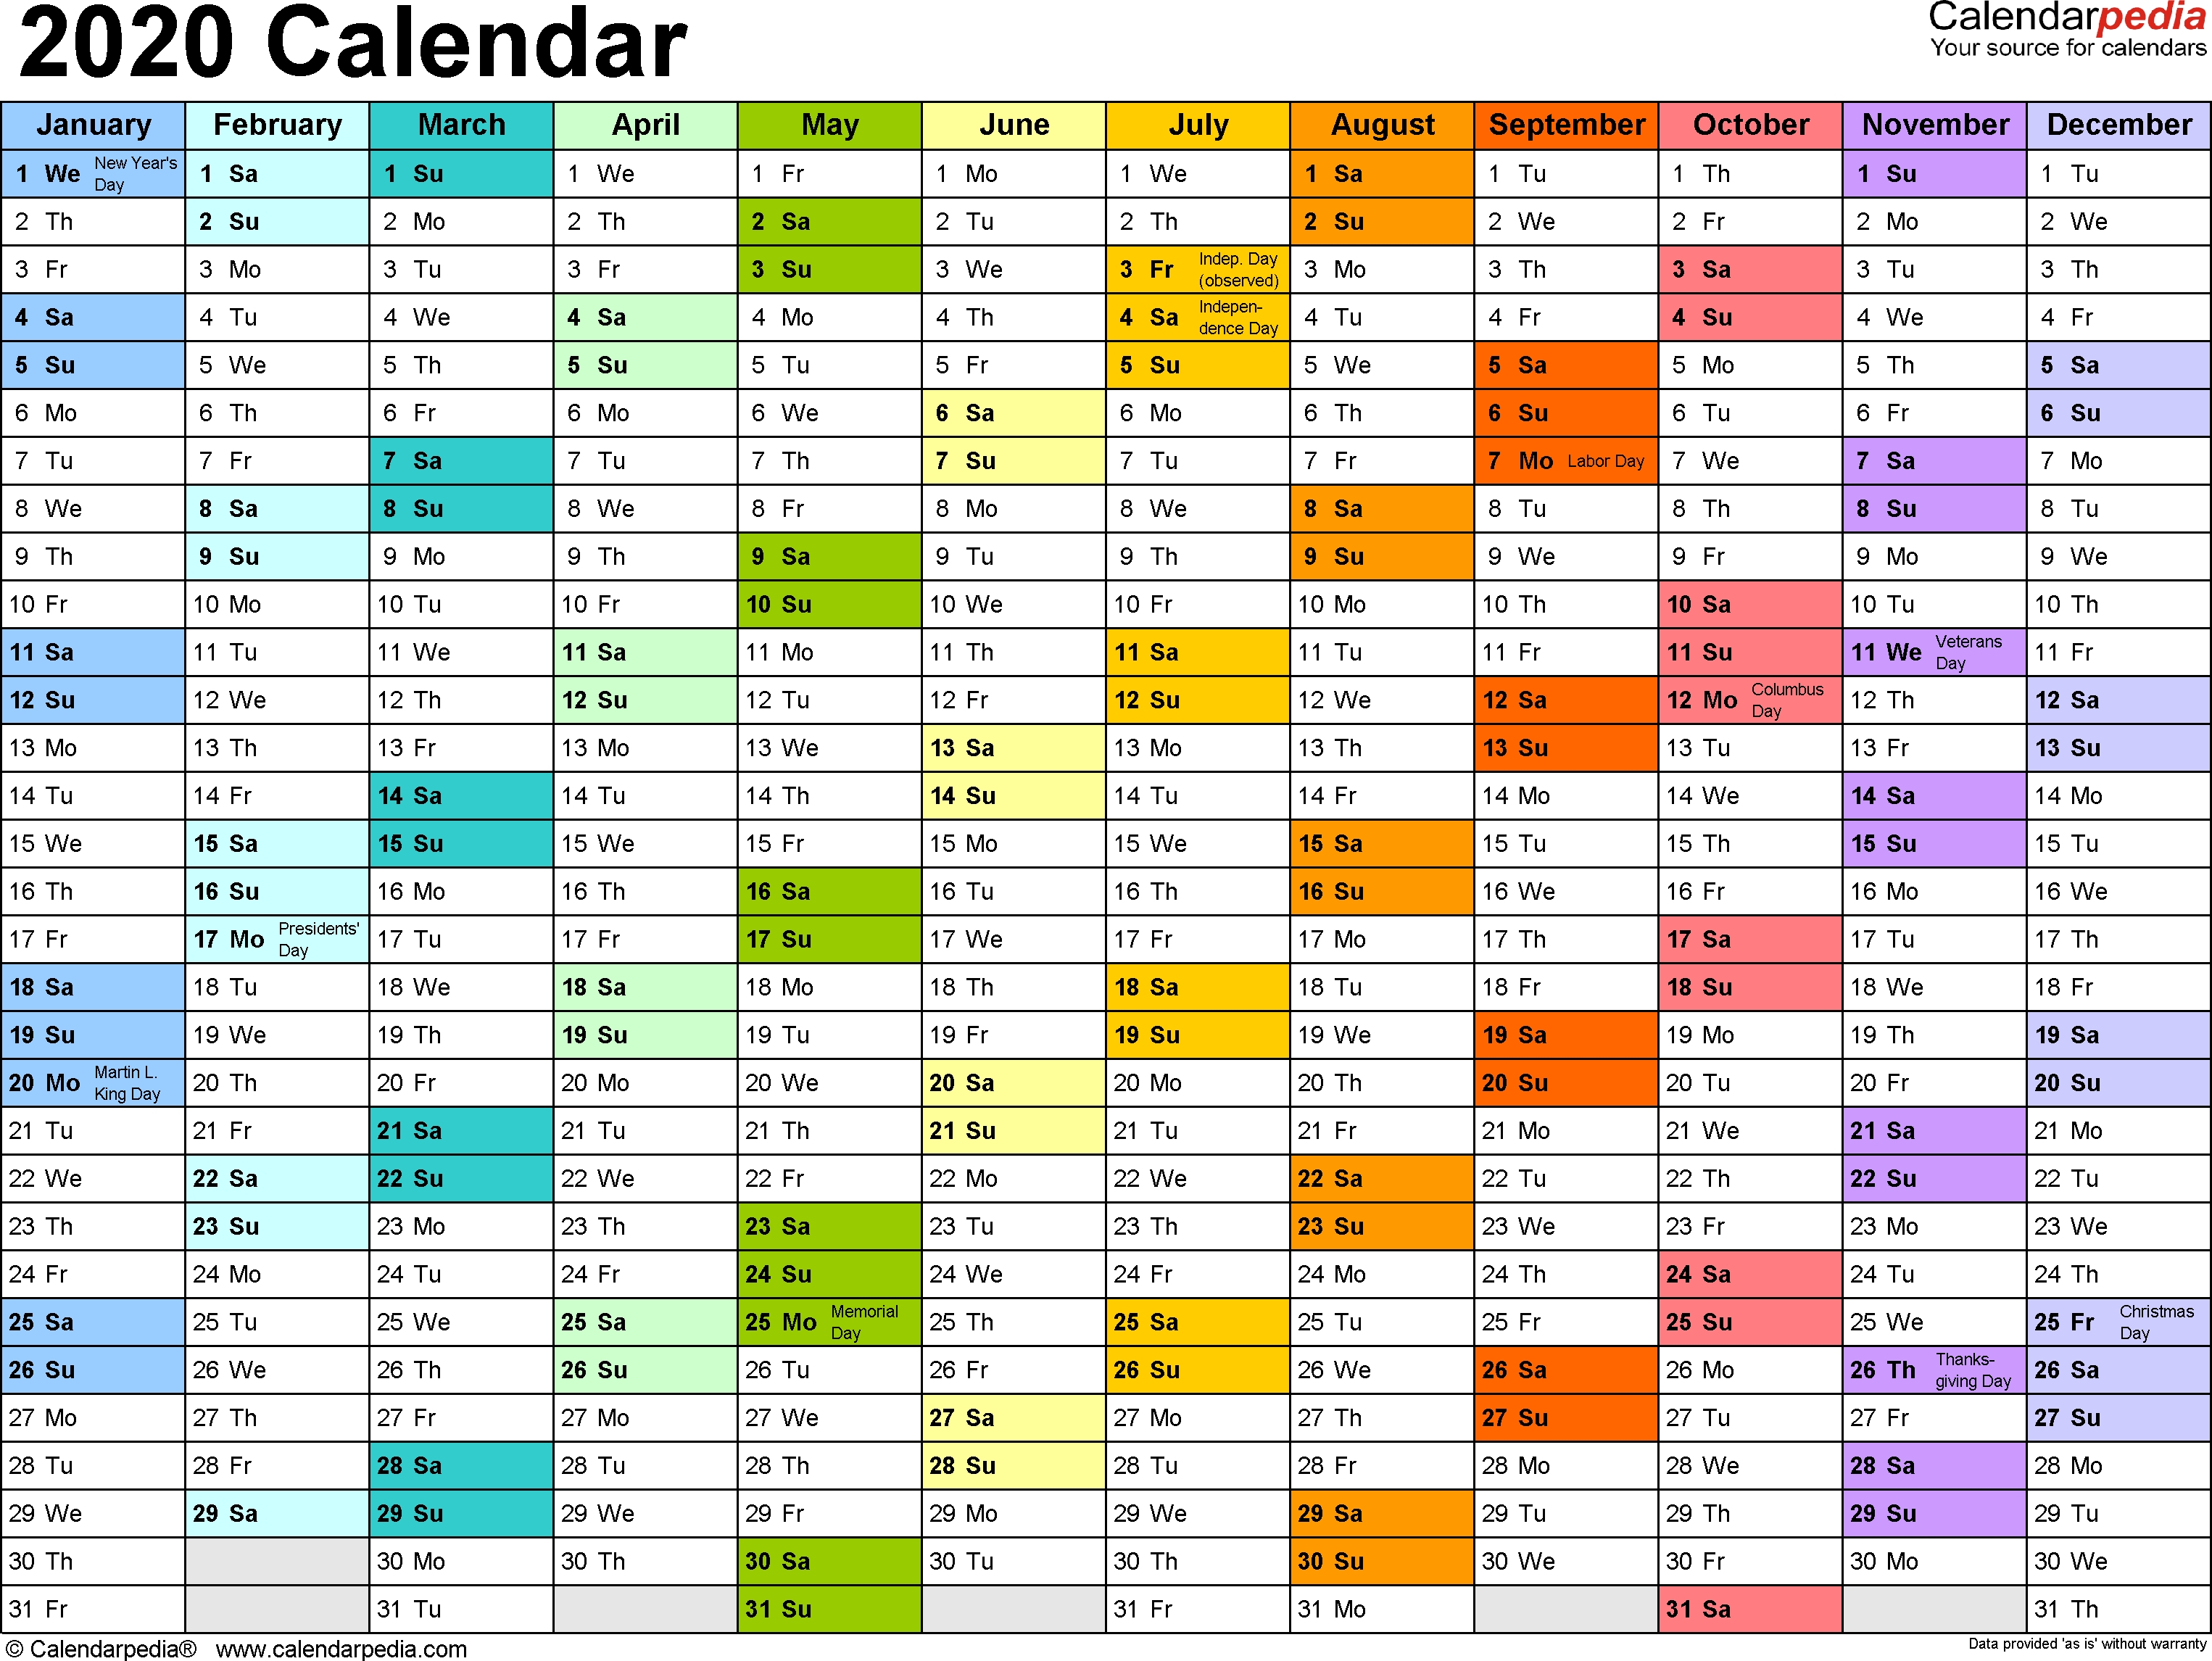 2020 Calendar - Download 18 Free Printable Excel Templates-Template Monthly Calendar 2020.xls